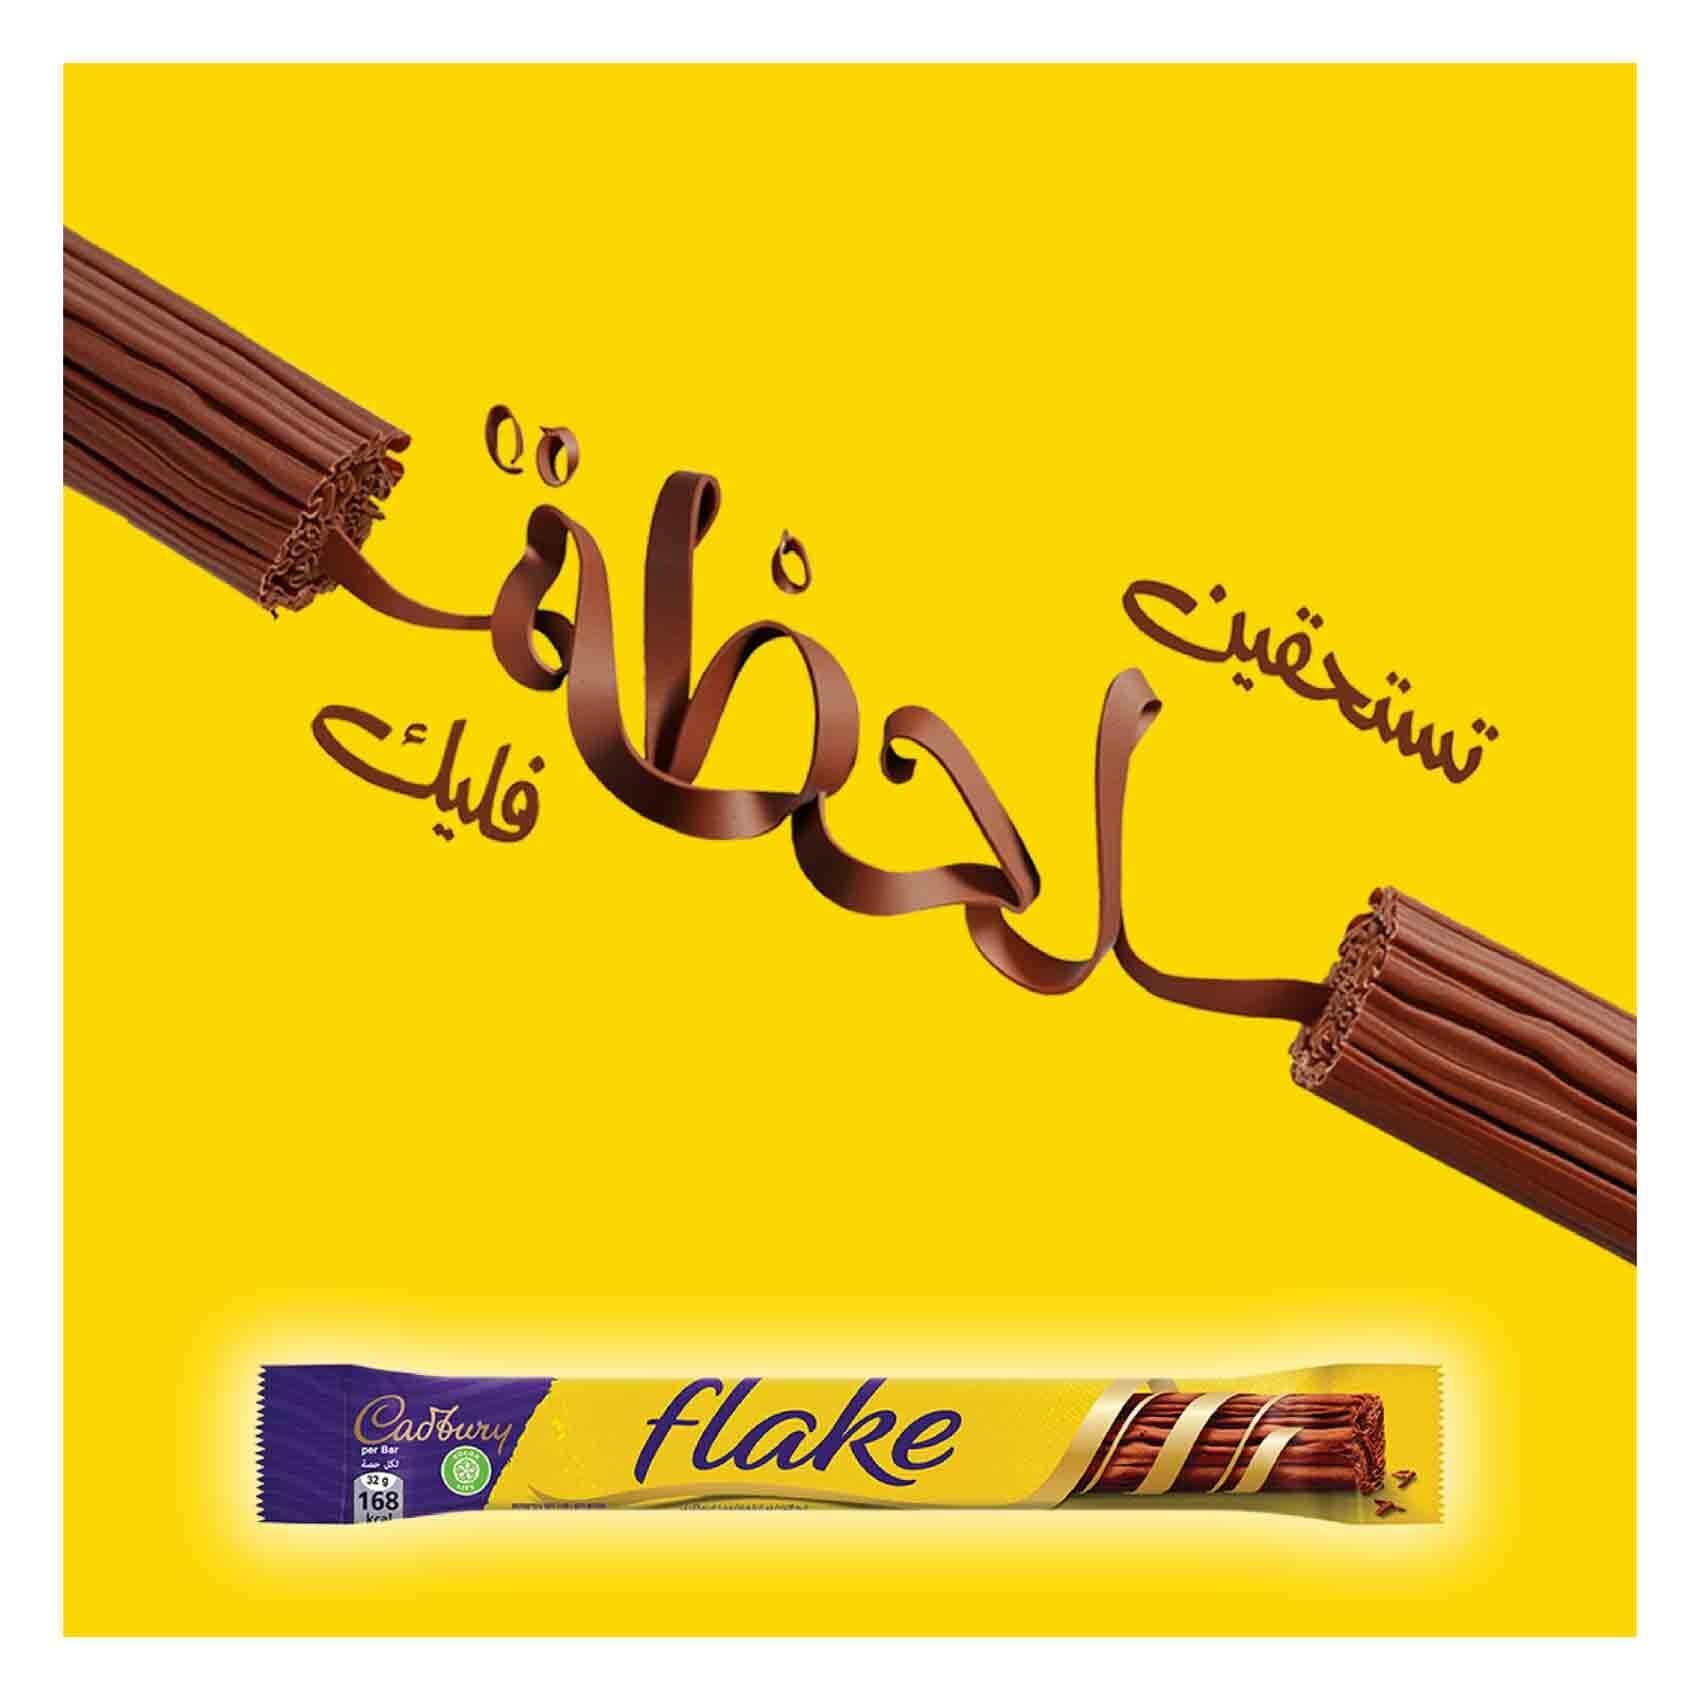 Cadbury Flake 32g - Albazaar Market